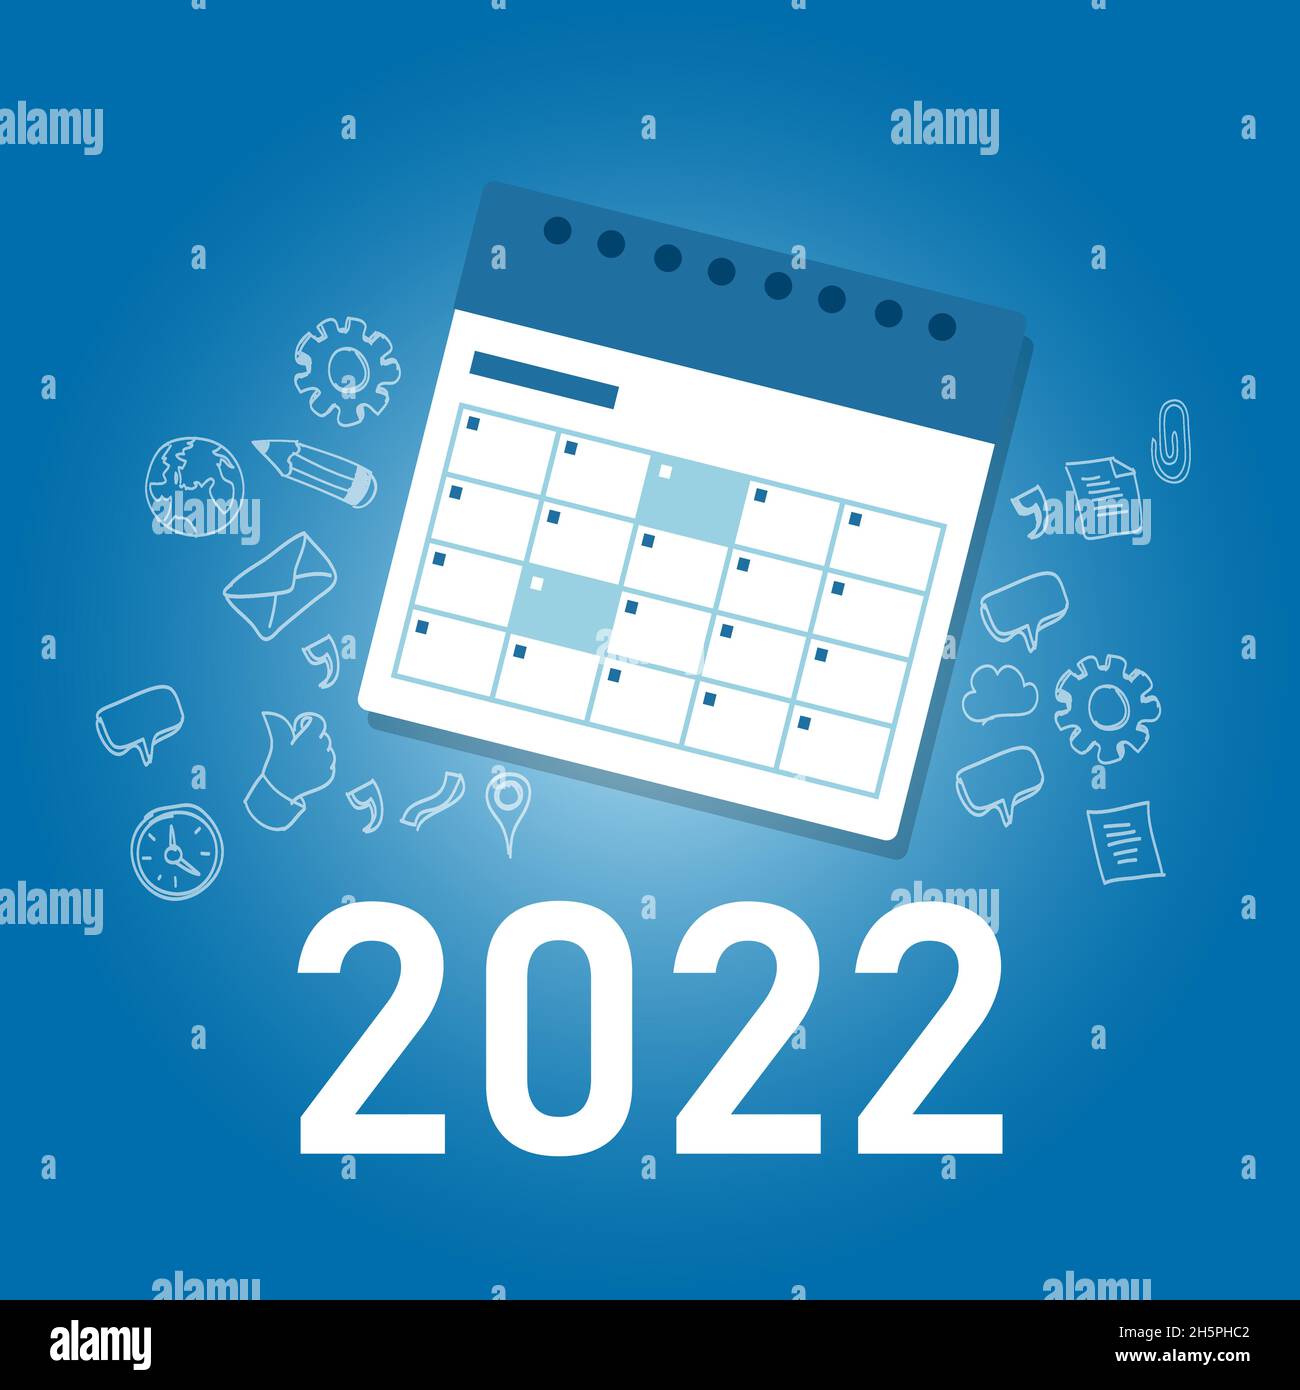 2022 calendar agenda target planning schedule of next new year reminder in business Stock Vector